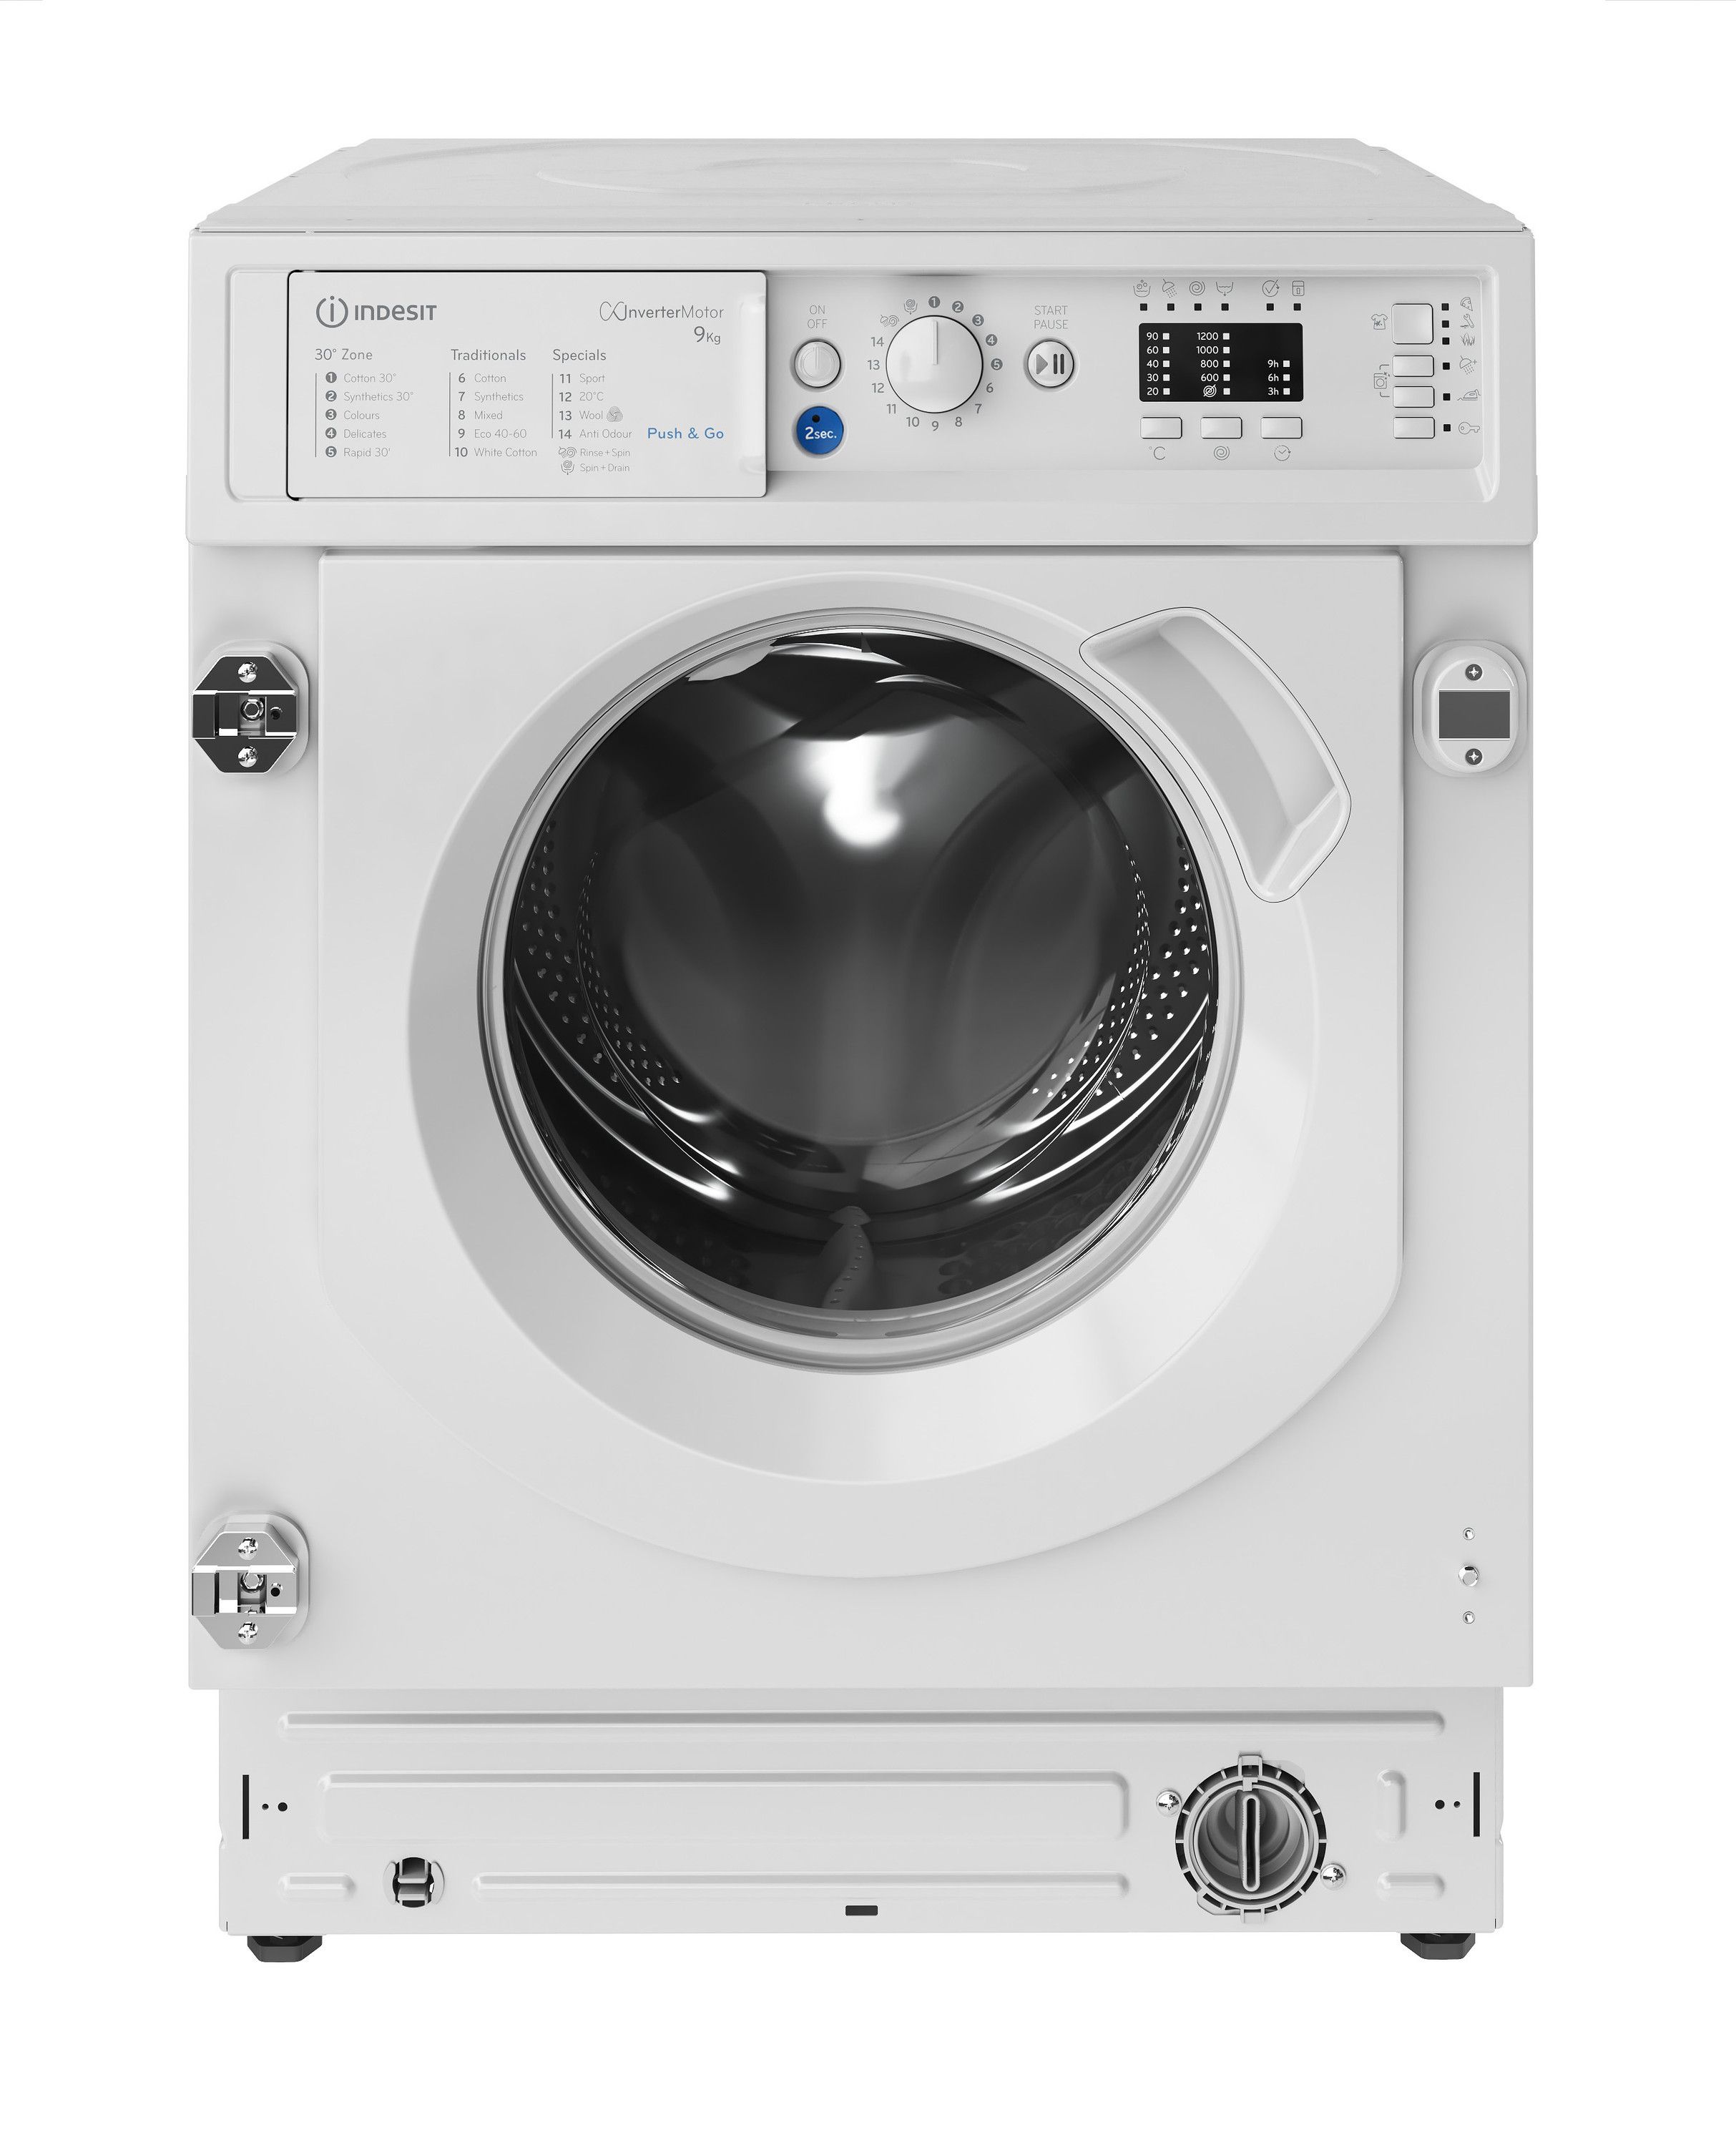 Indesit BIWMIL81485UK Integrated 8kg Washing Machine with 1400 rpm - White - B Rated, White